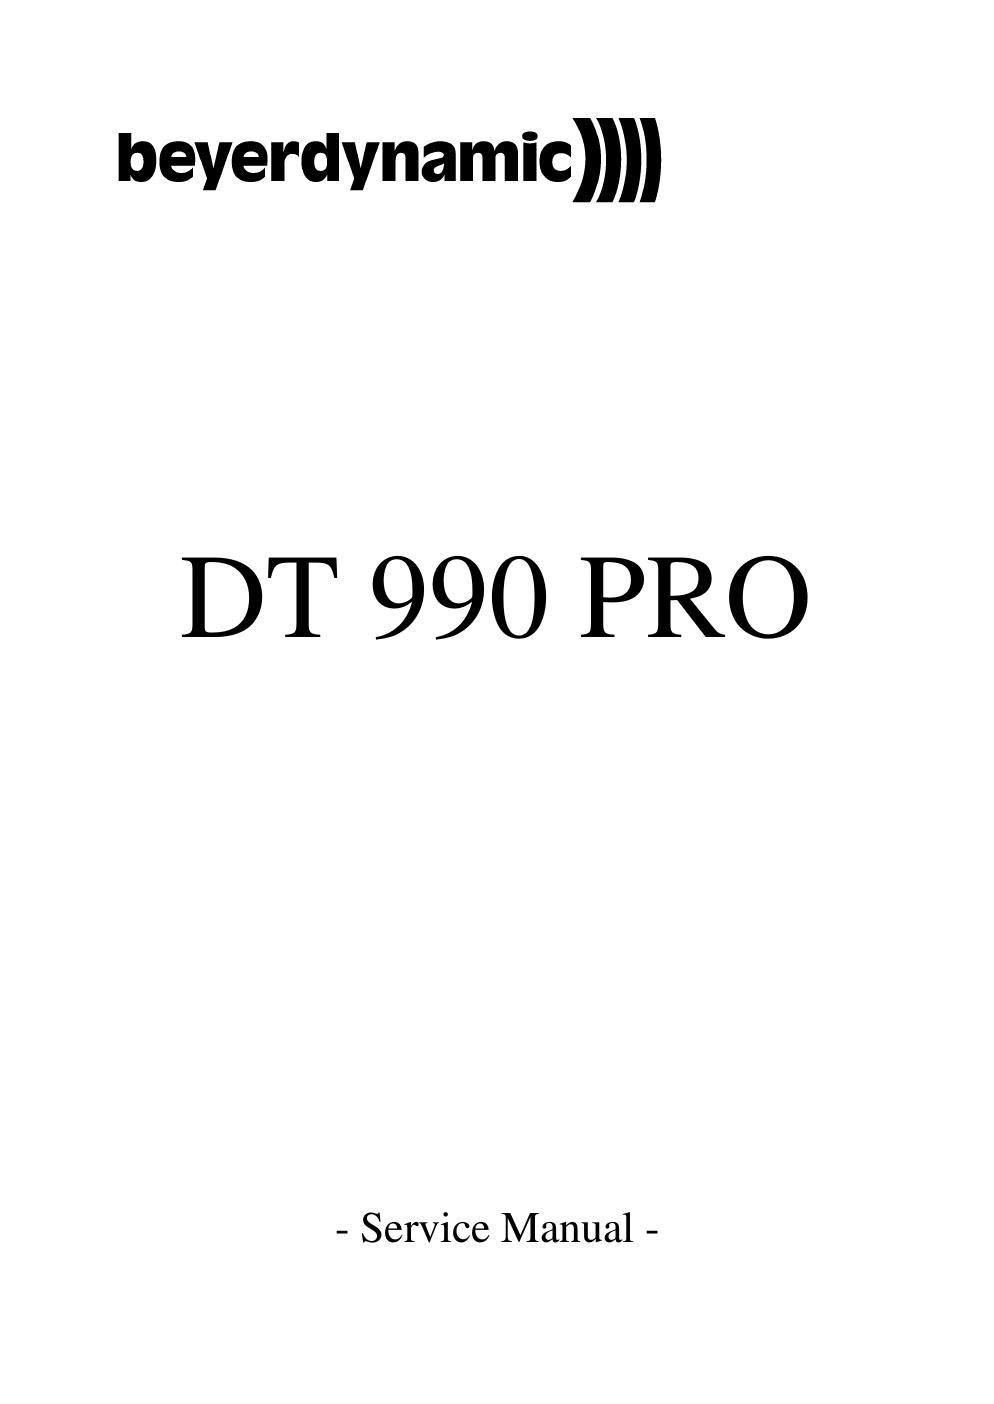 beyerdynamic dt 990 pro service manual